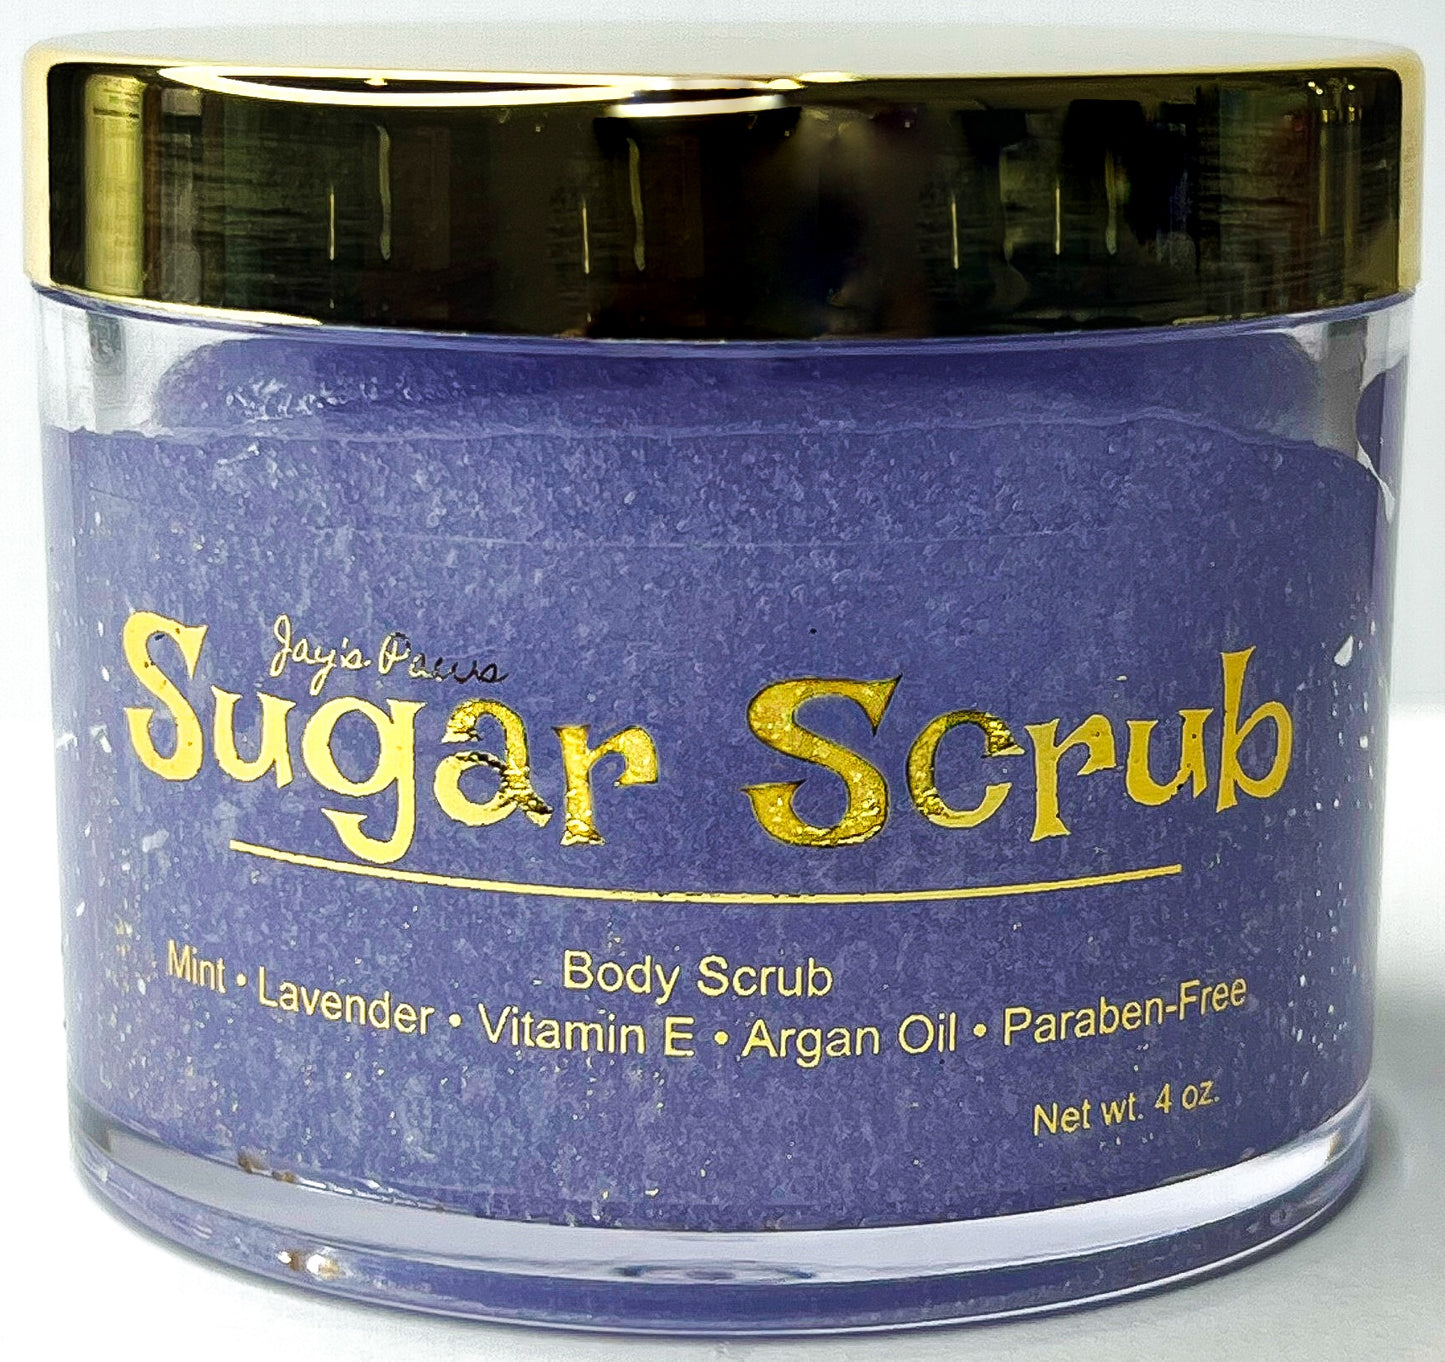 Jay’s Paws Luxury Sugar Scrub - with Vitamin E, Jojoba Oil, Argan Oil. -Paraben-Free Mint and Lavender Scented